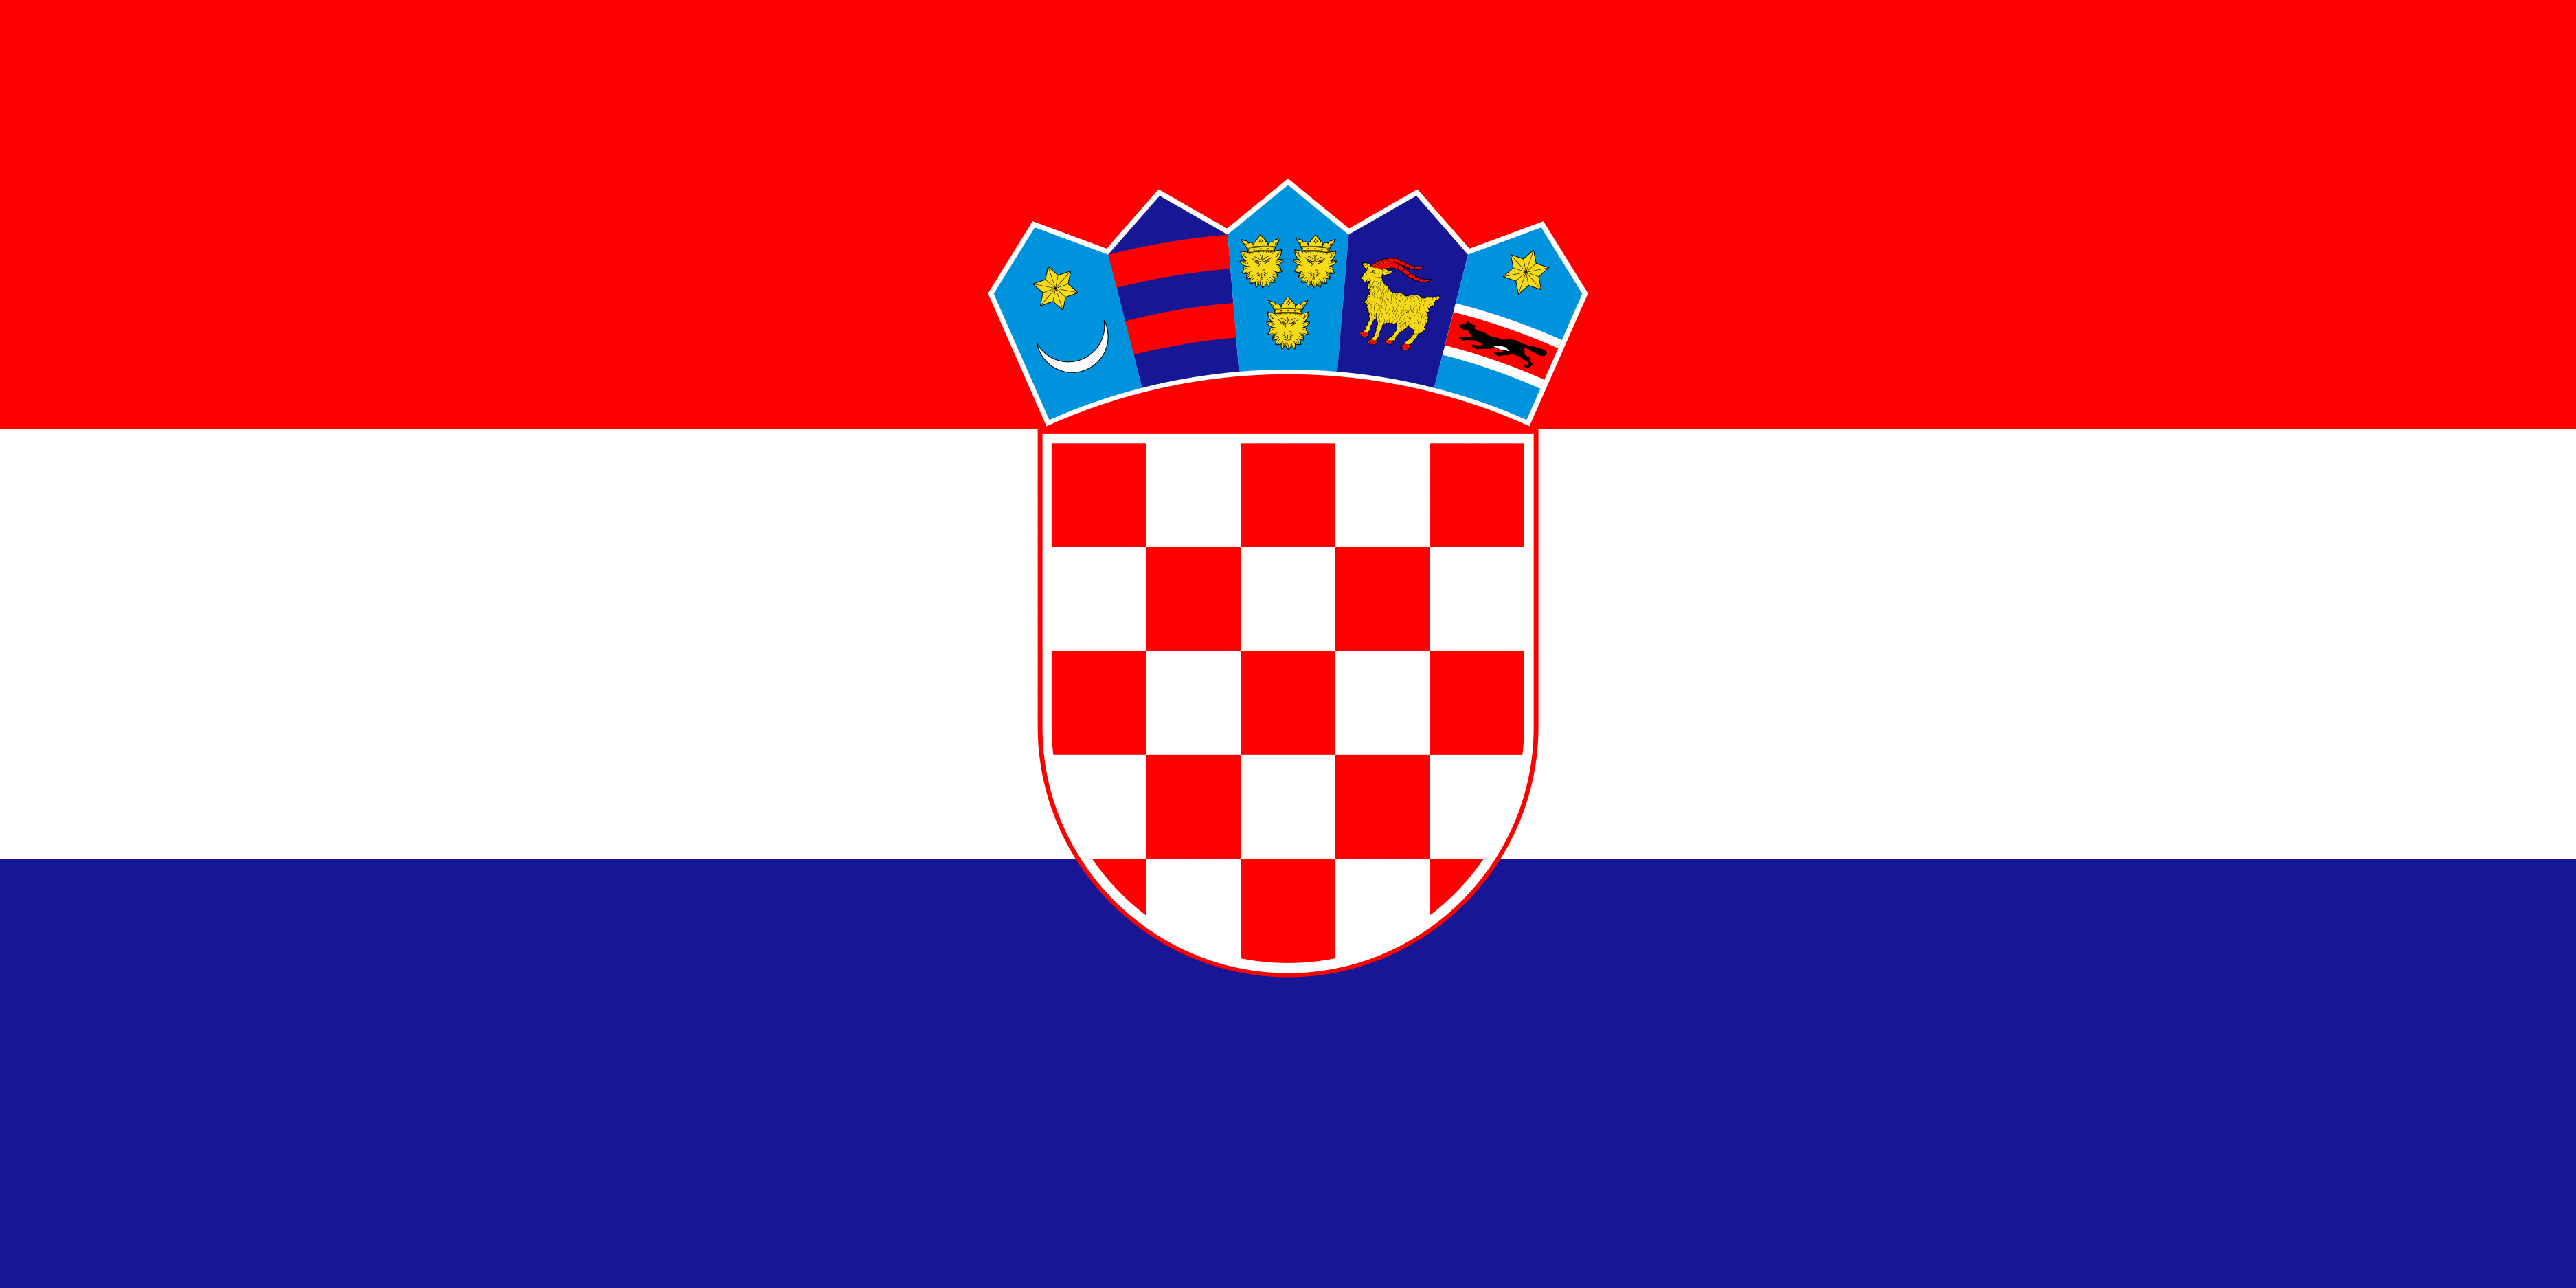 Croatia Flag Image Free Download Flags Web